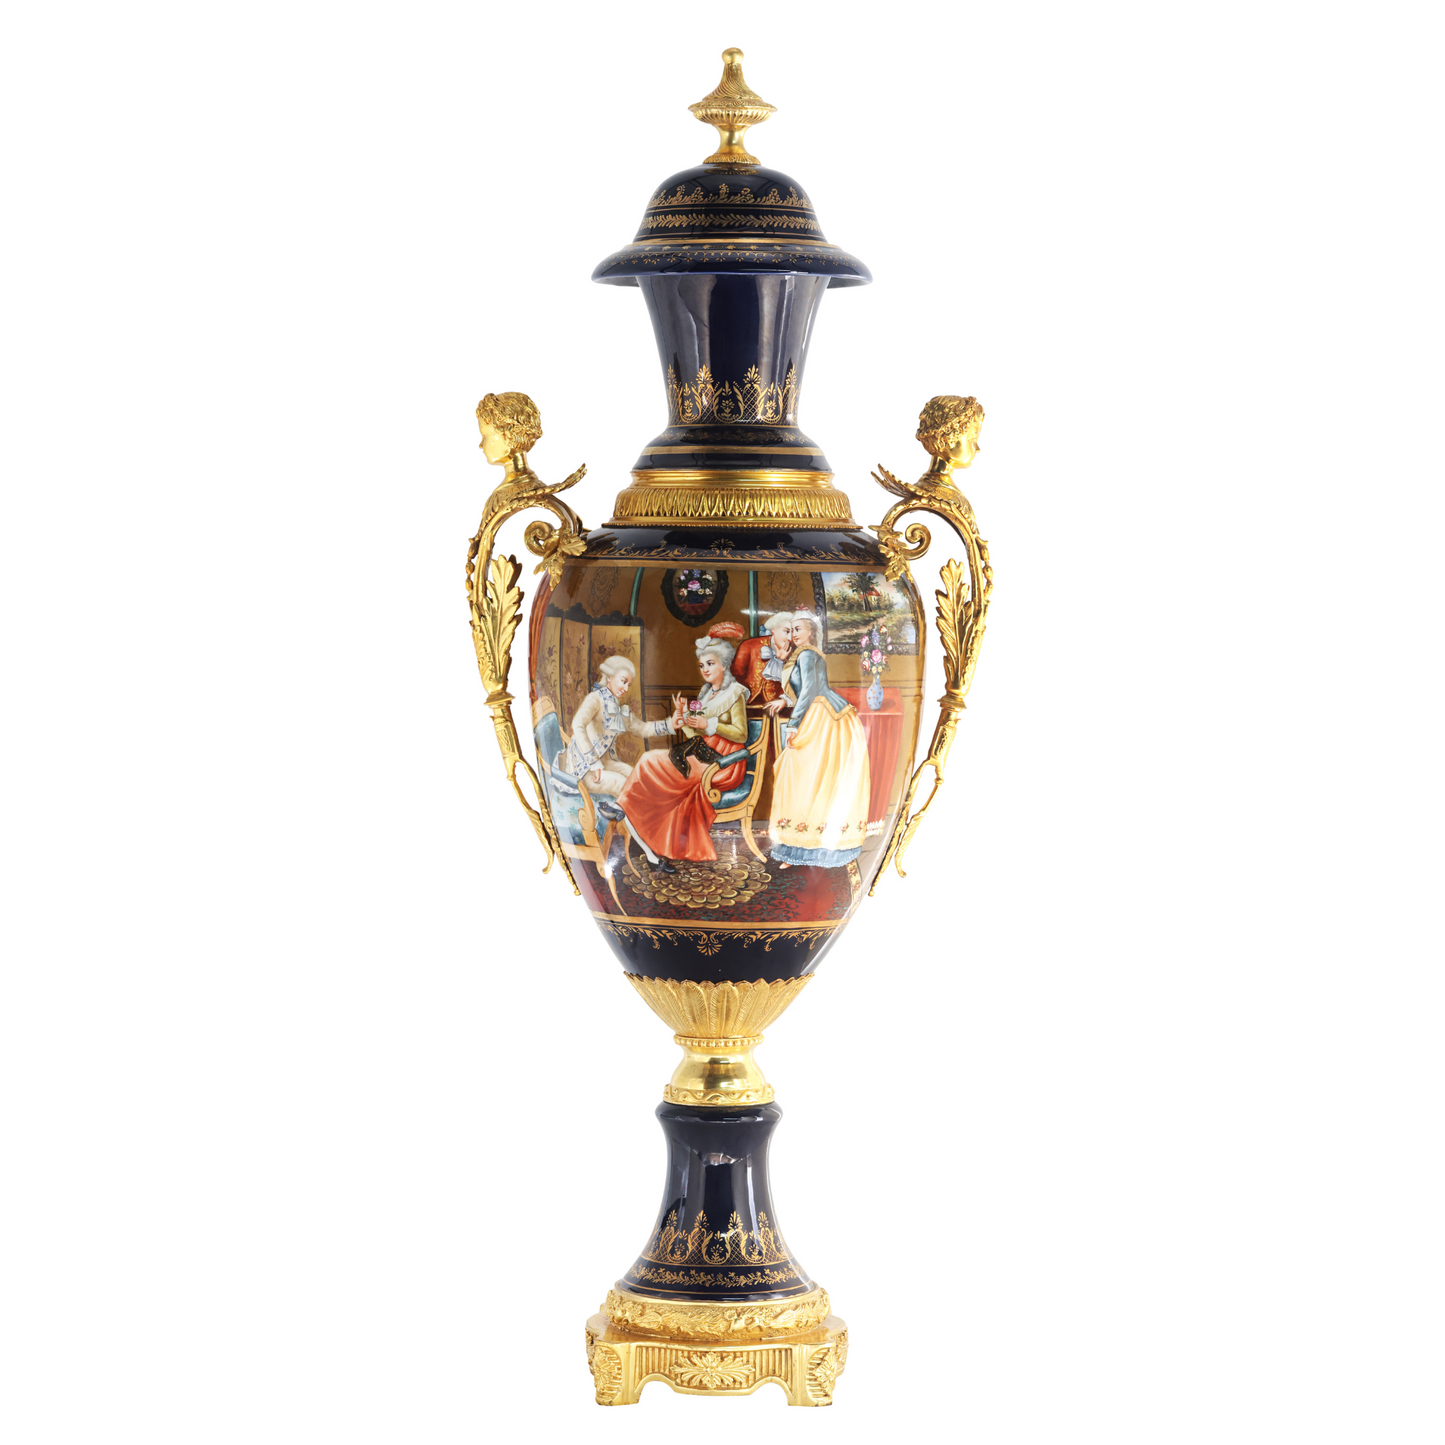 Striking Porcelain And Bronze Hand-Painted Cherub Handle Vase